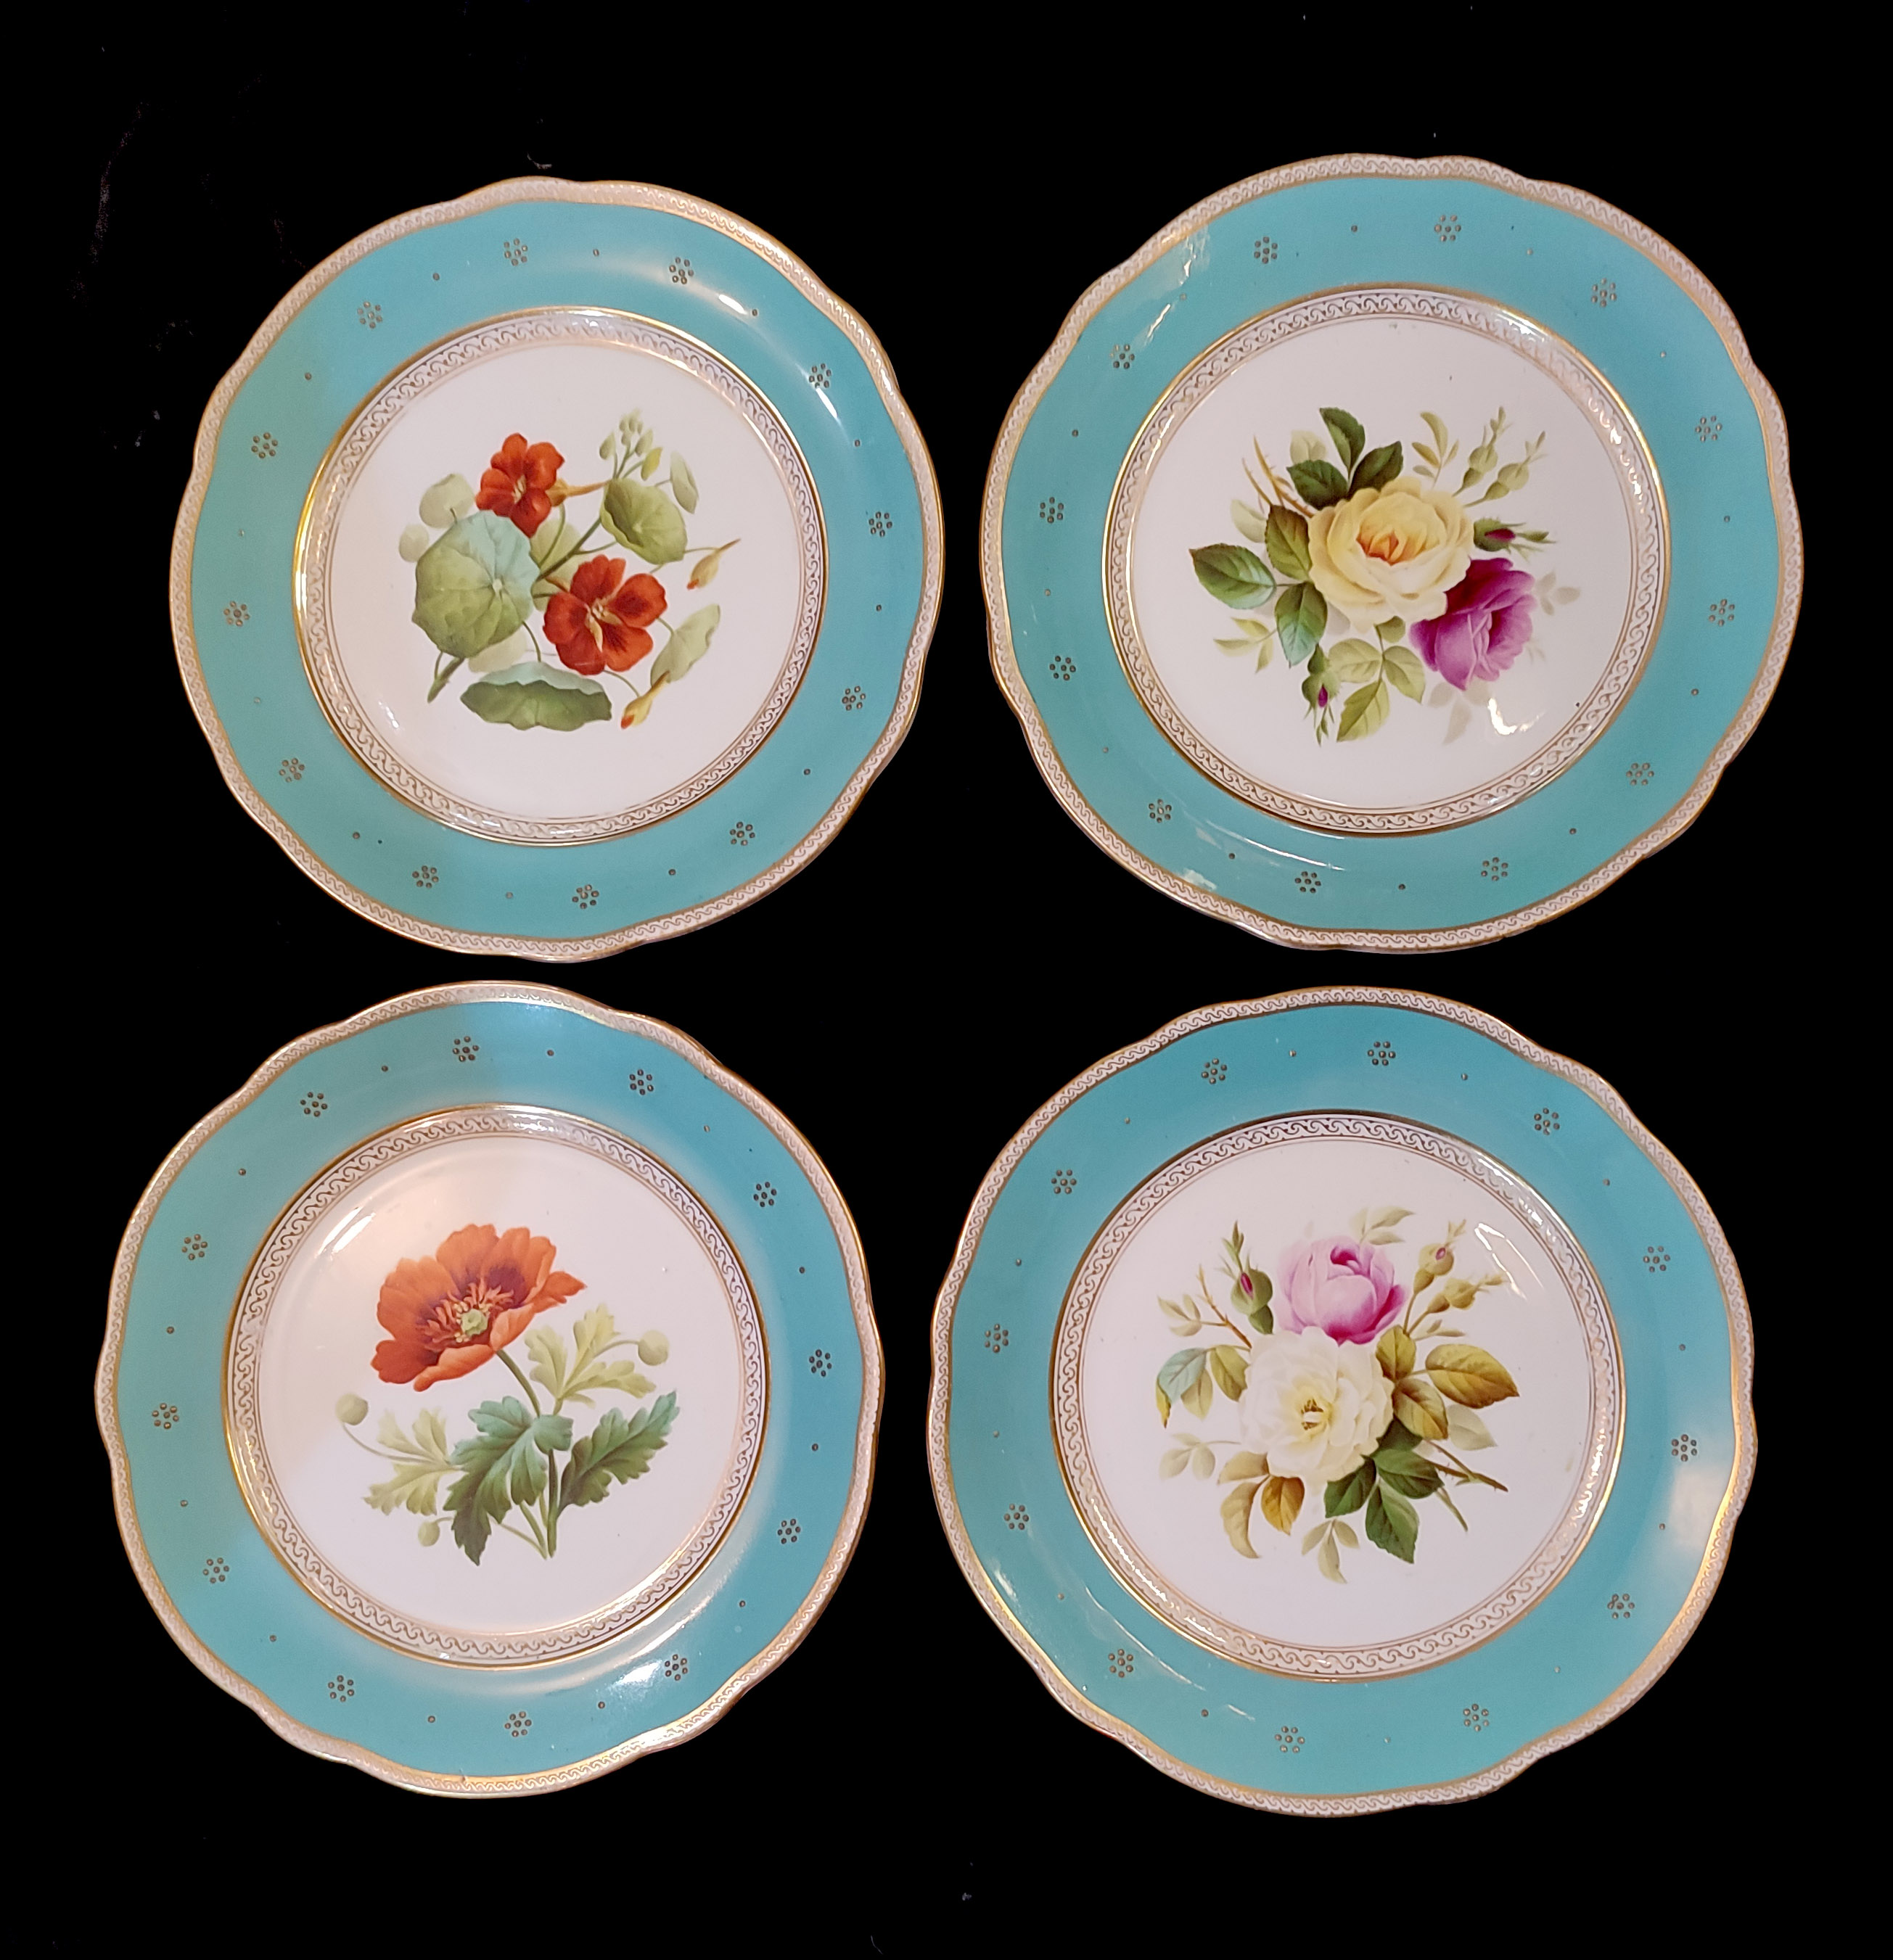 THOMAS BARLOW, A 19TH CENTURY ENGLISH PORCELAIN COMPORT SET Four plates having a wide green border